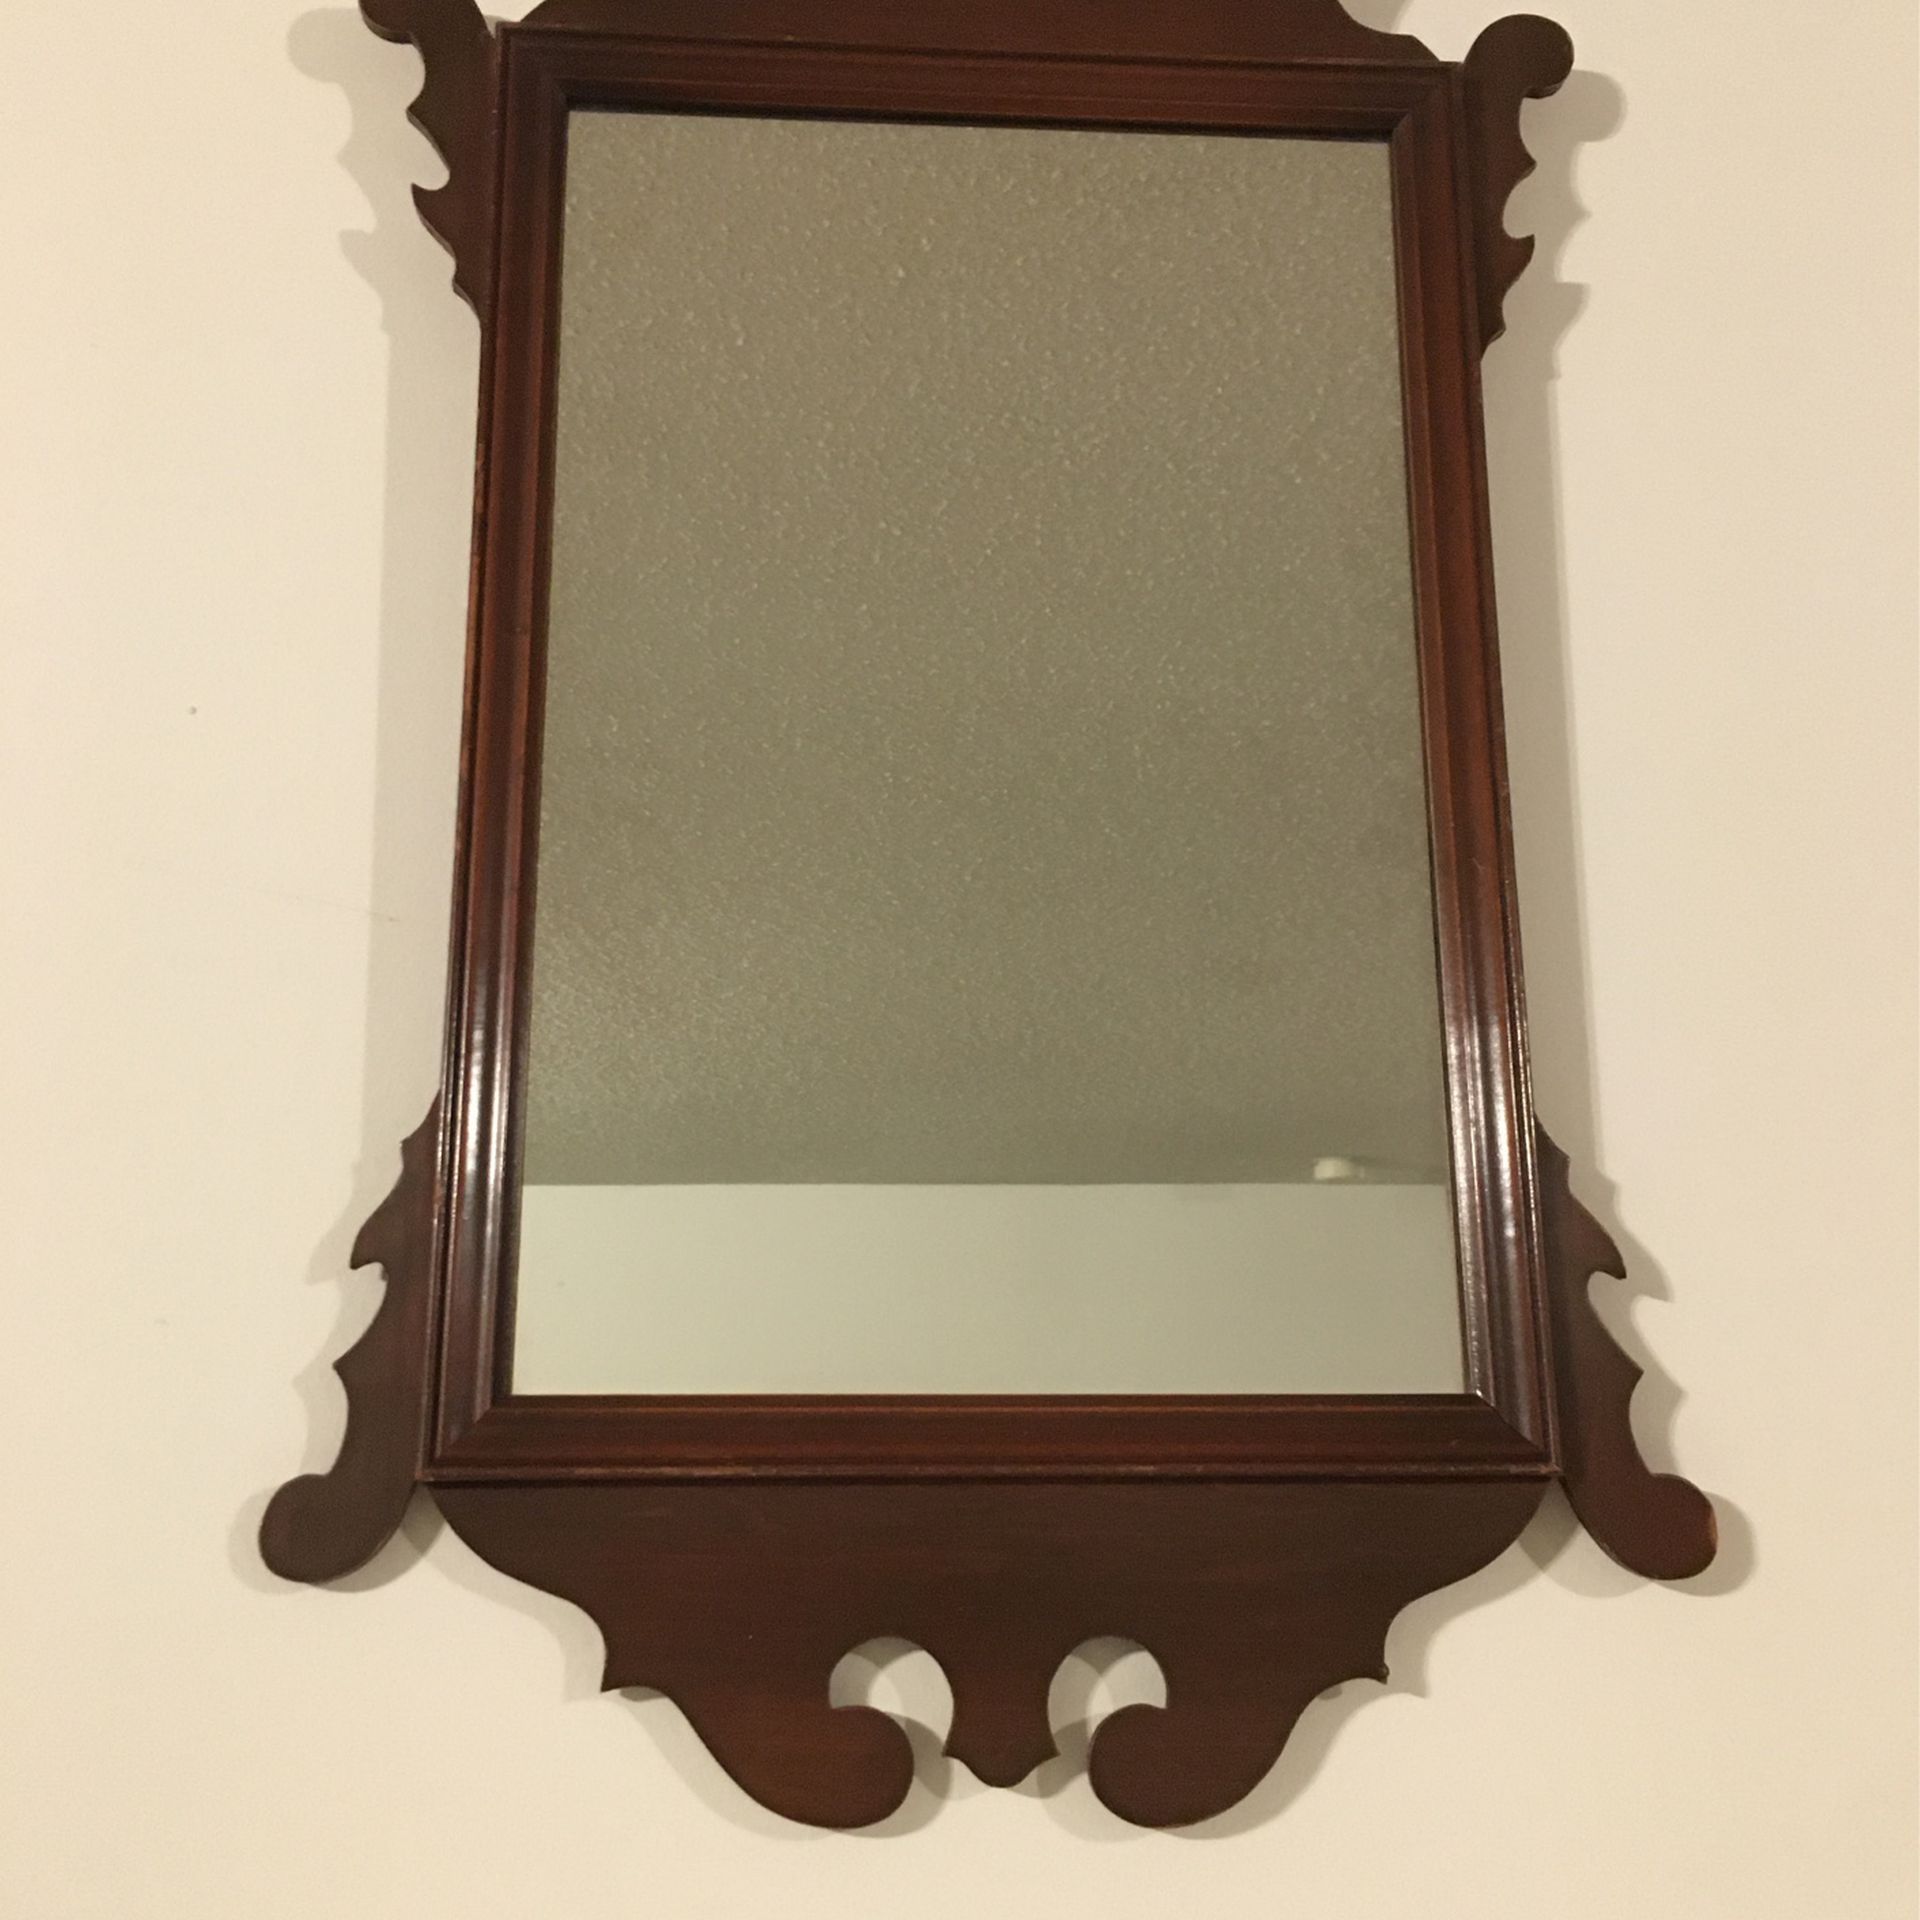 Antique wood framed mirror 28-1:2" x 17-1:2"